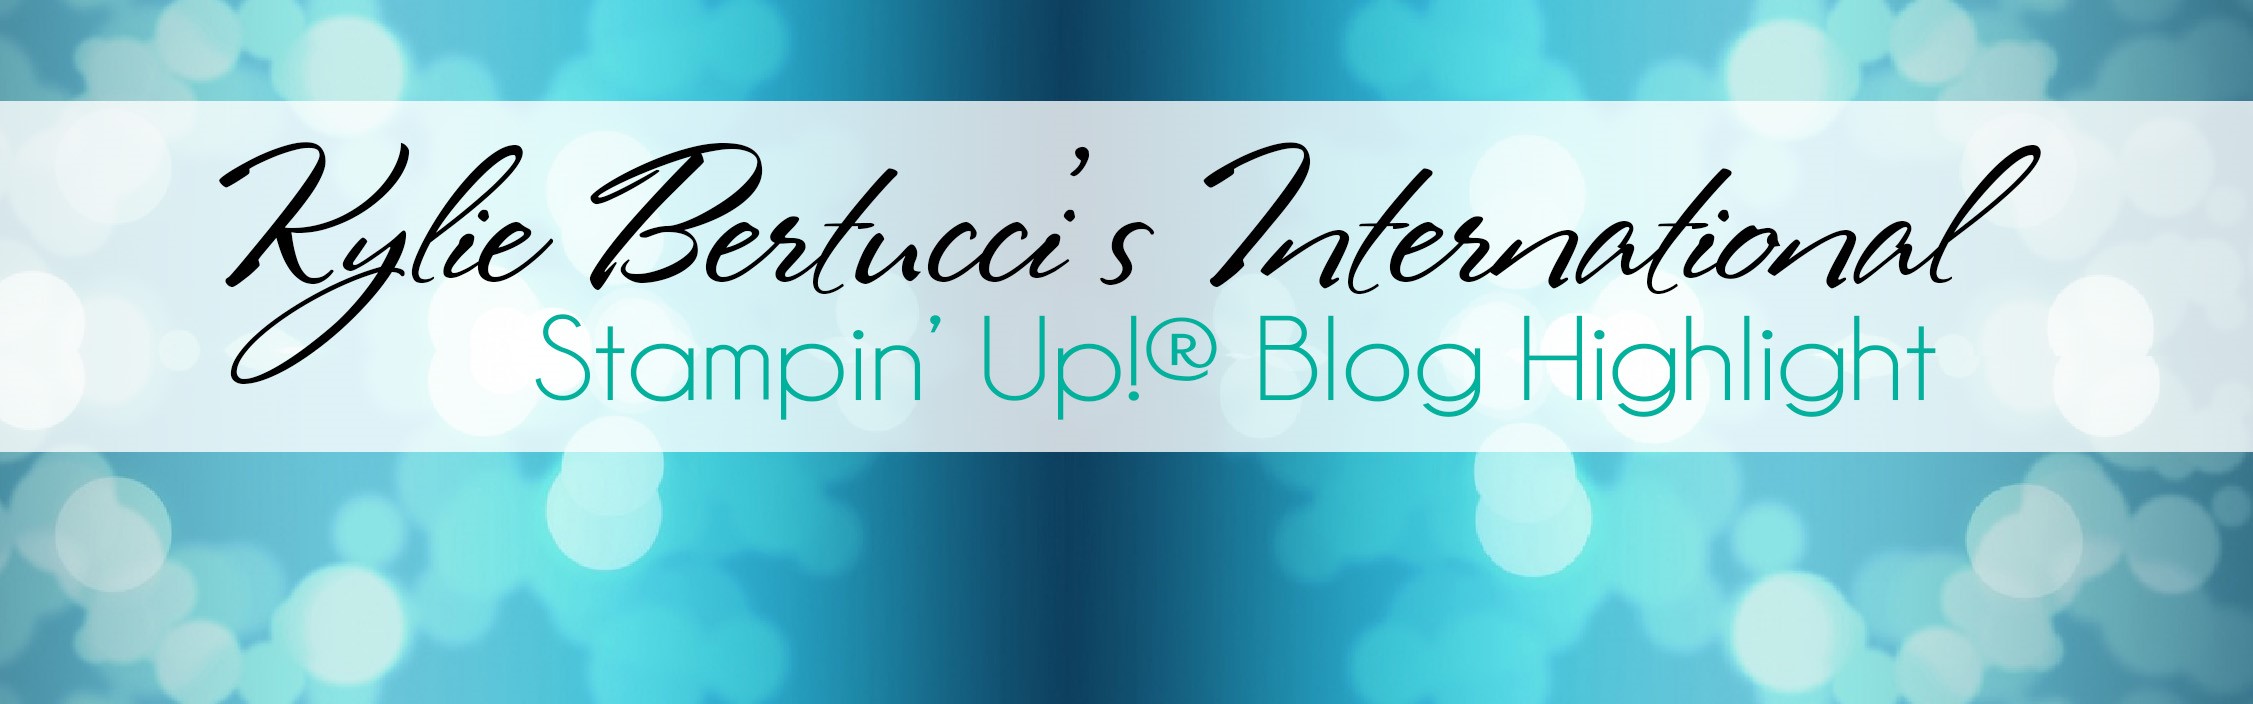 Kylie Bertucci Blog Highlight